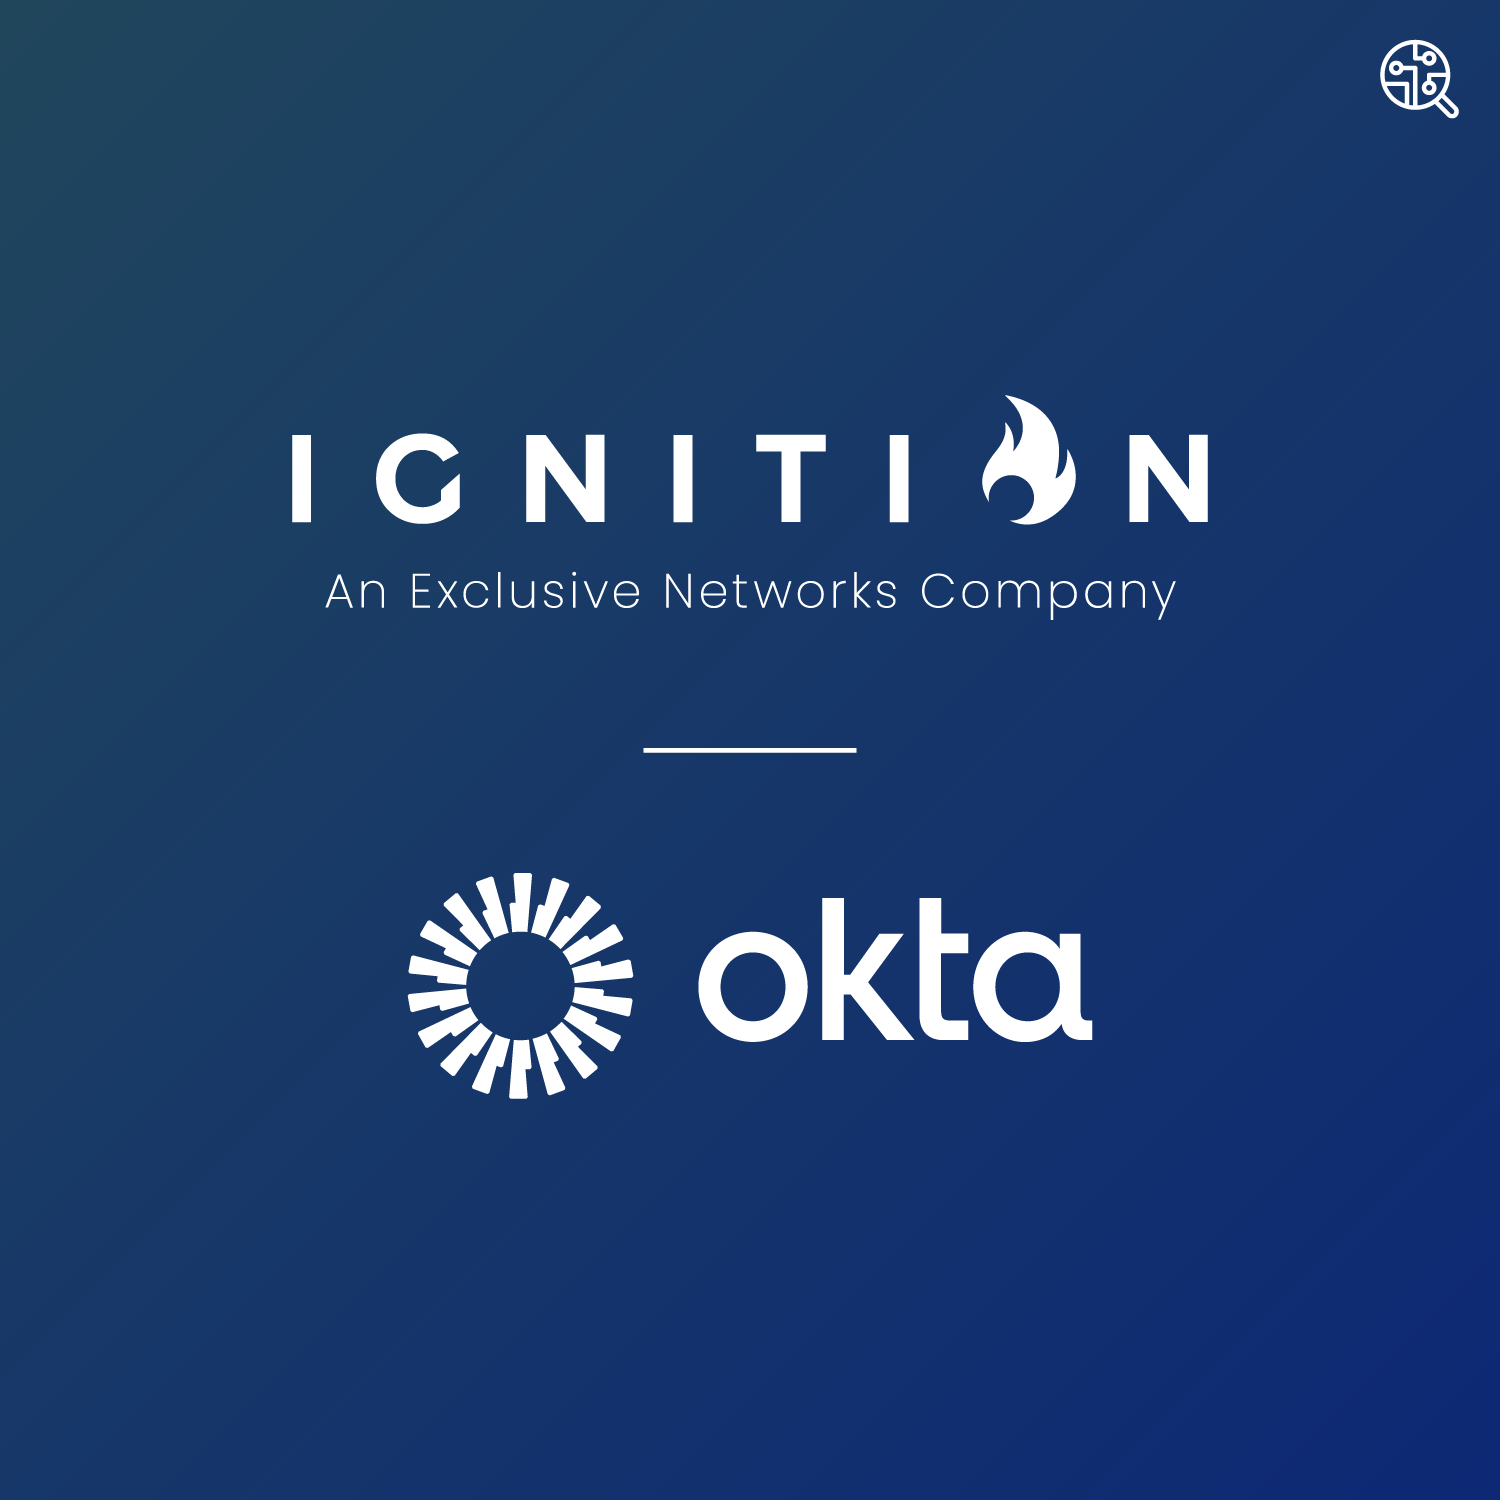 Blog thumbnail of the Ignition and Okta logos